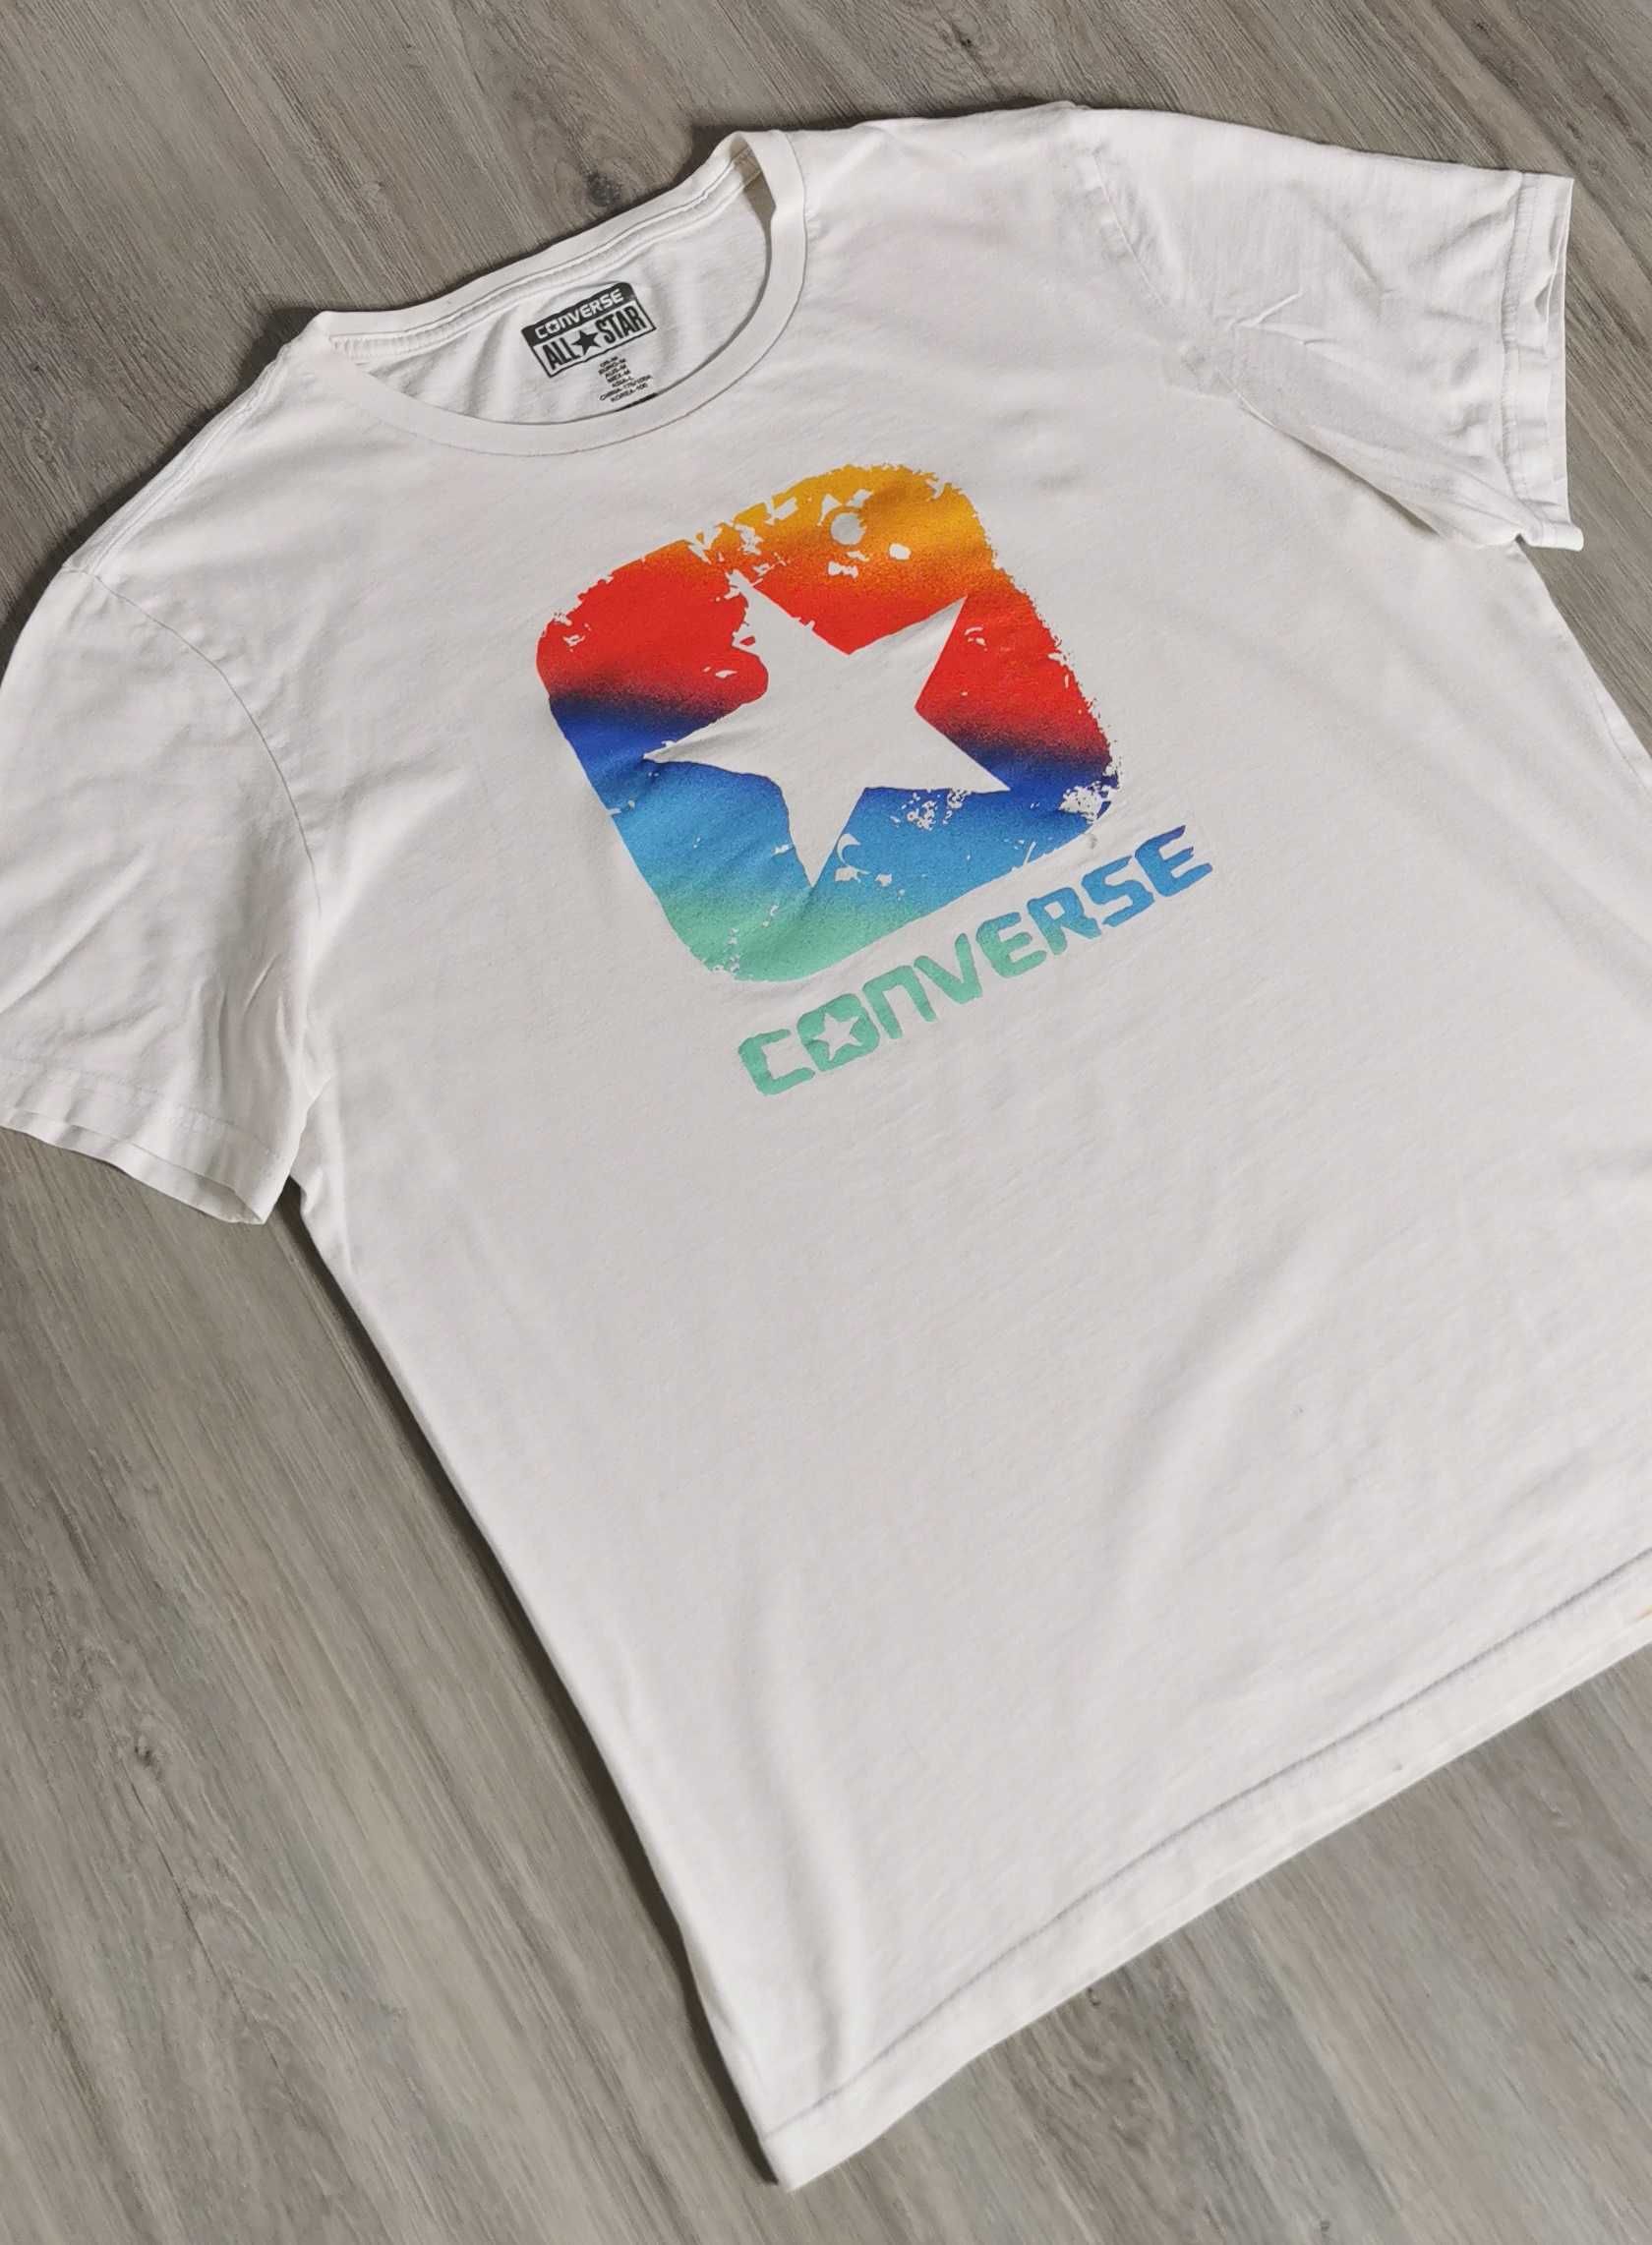 T-shirt Converse duży nadruk big print rozmiar M